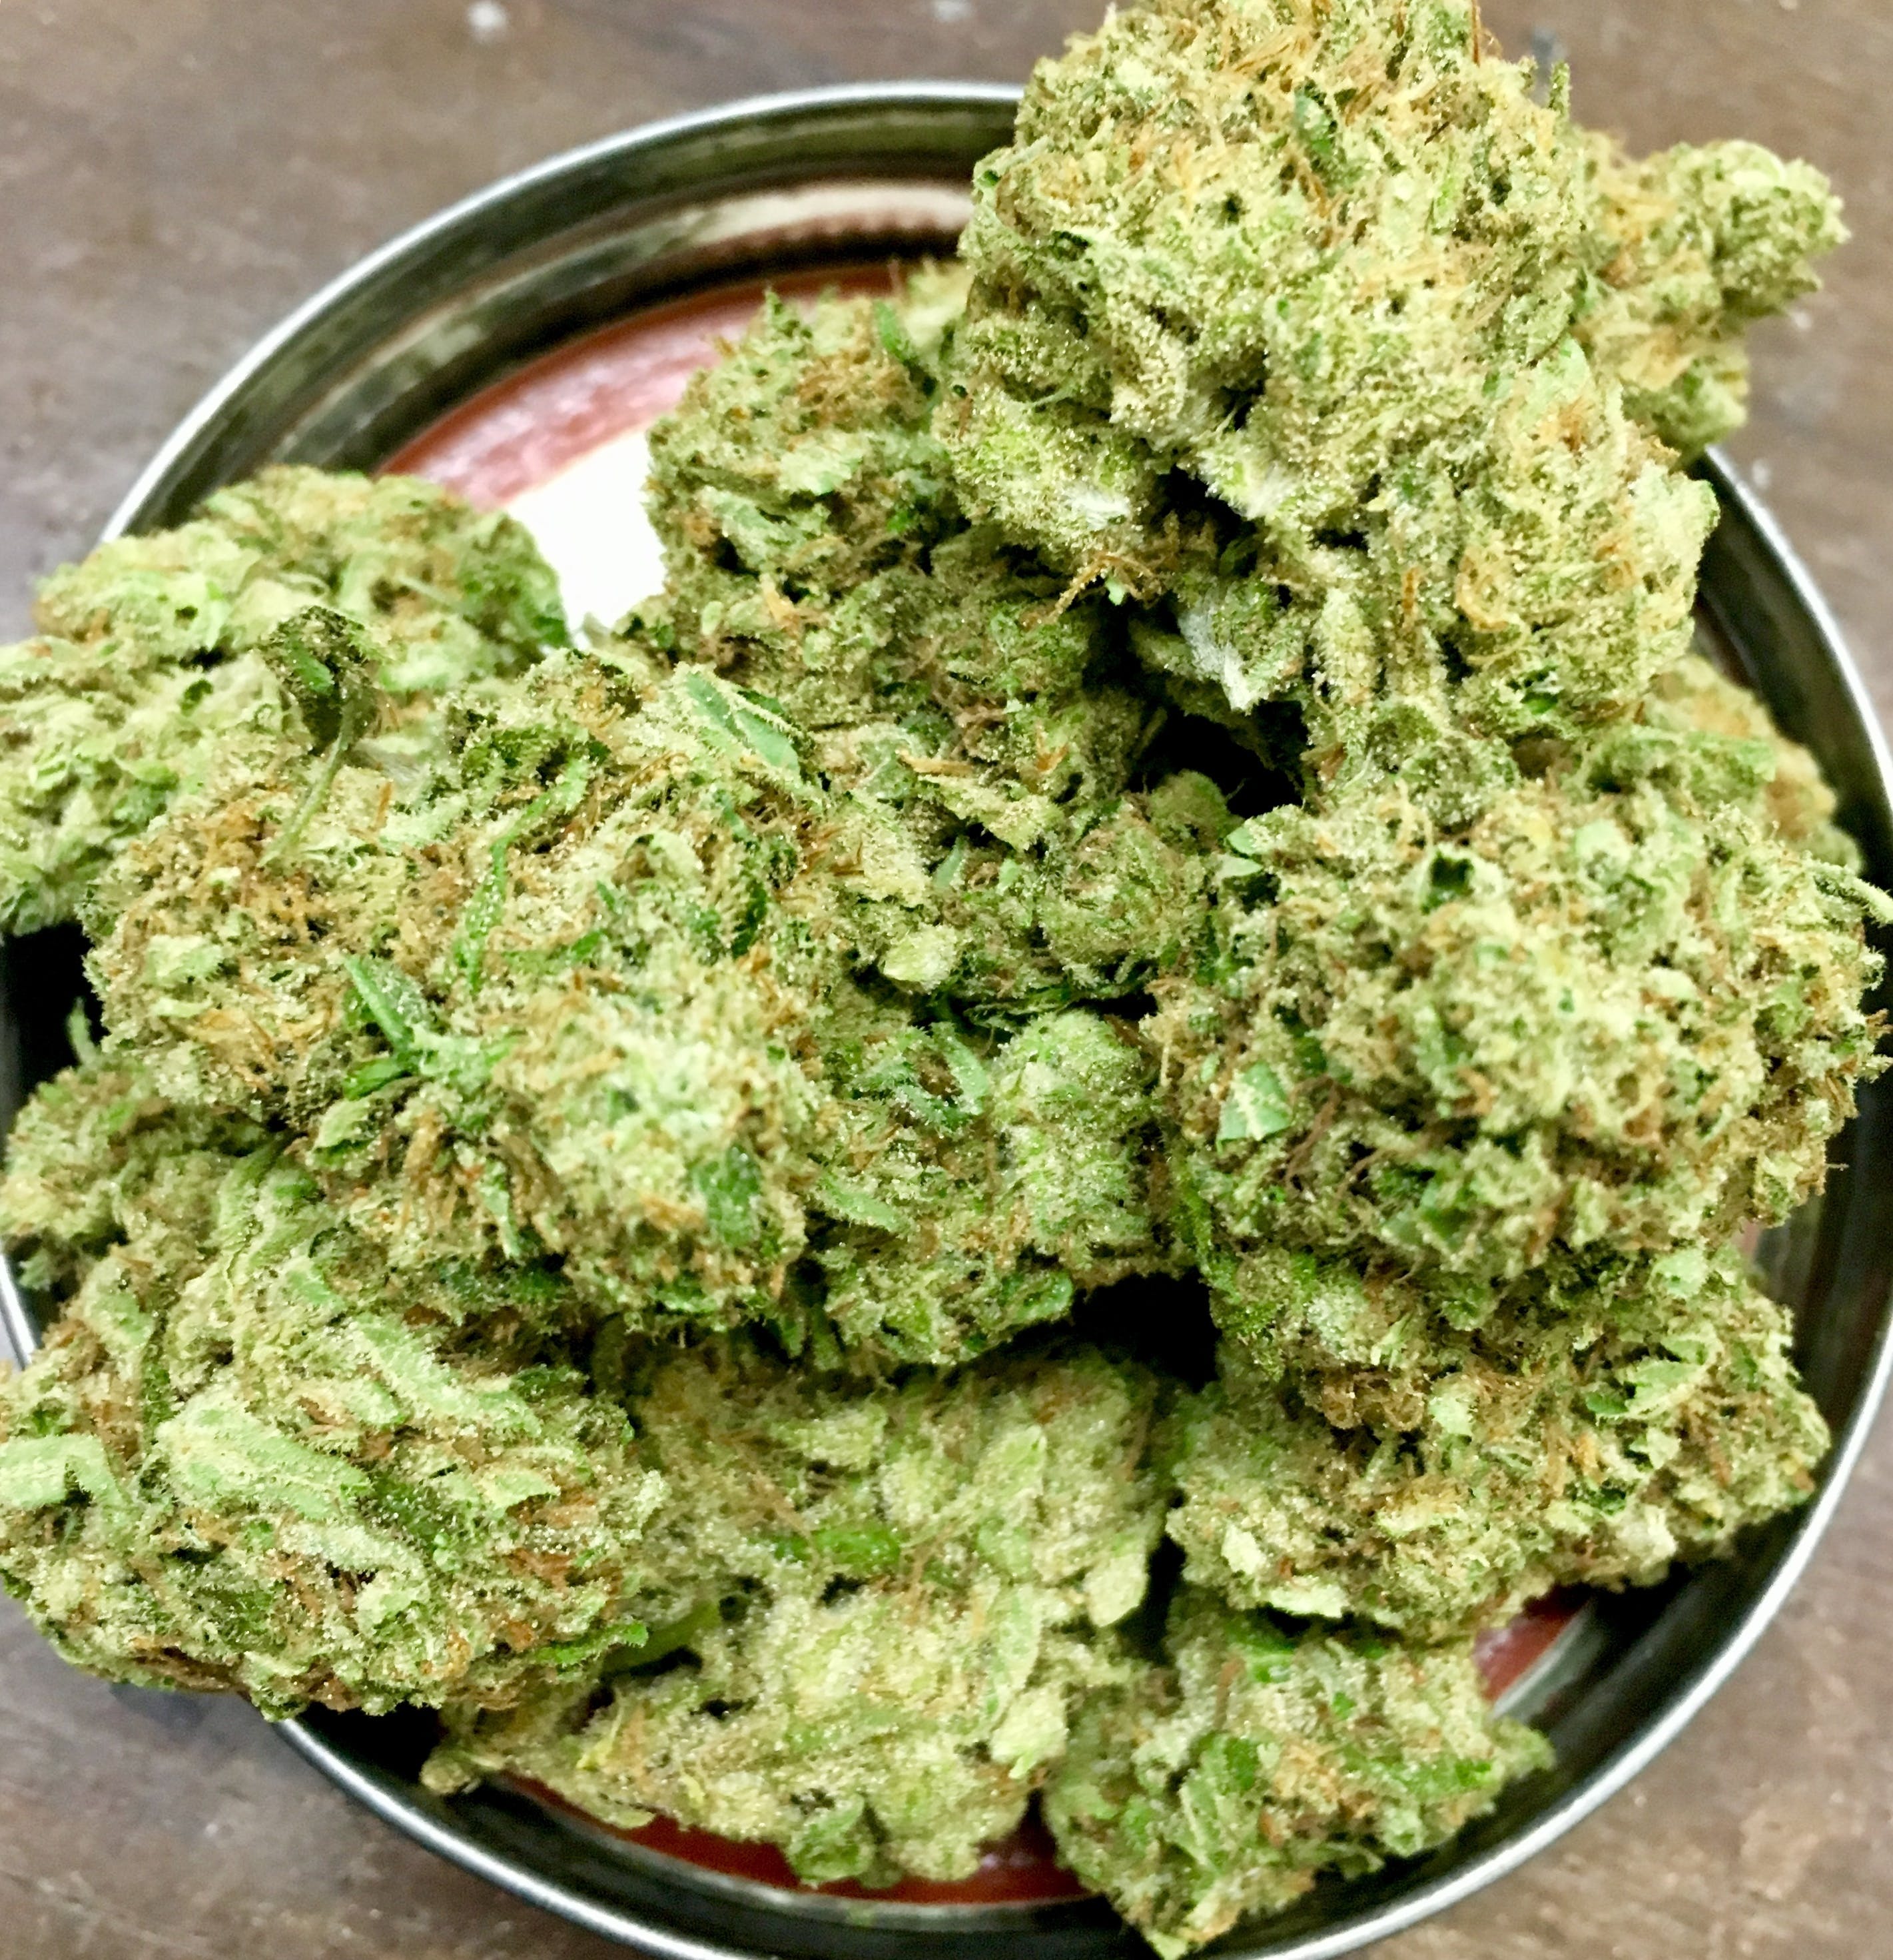 marijuana-dispensaries-mendocino-organics-in-vallejo-sherbet